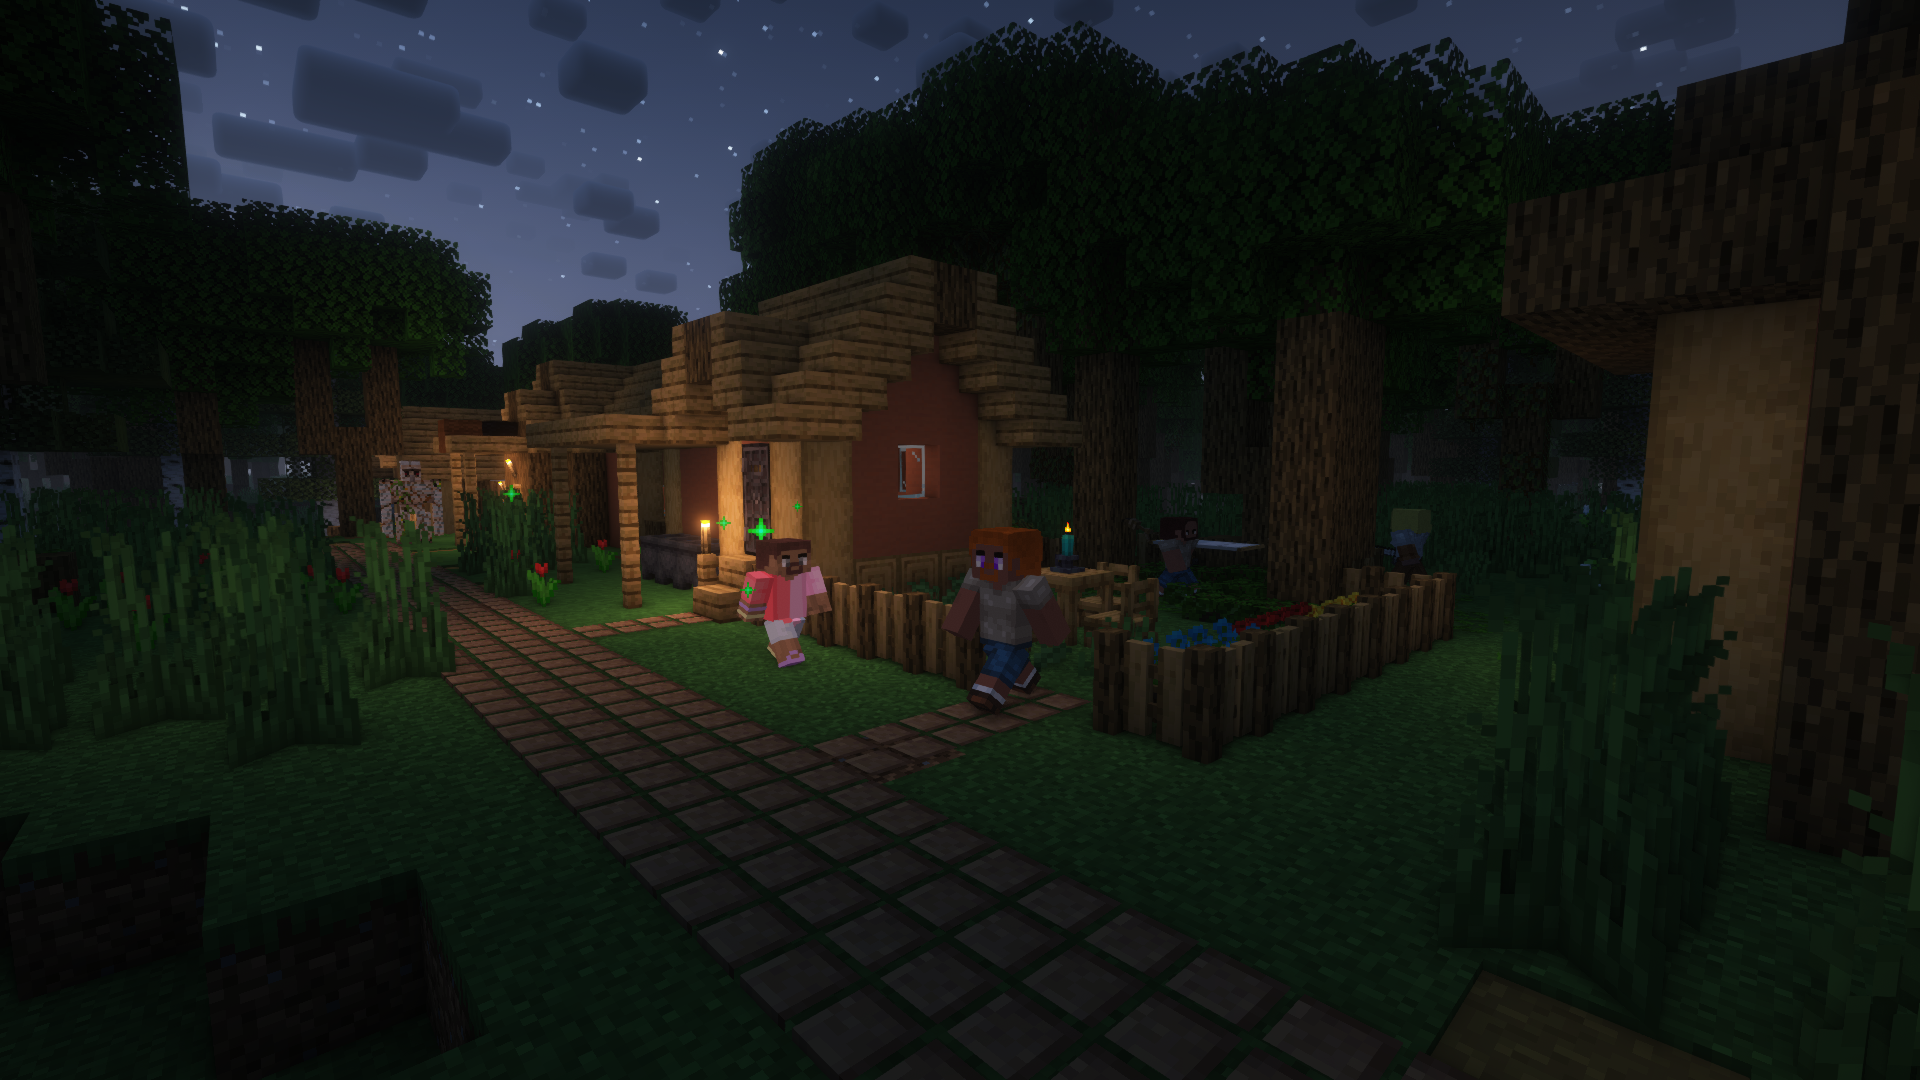 Nighttime village